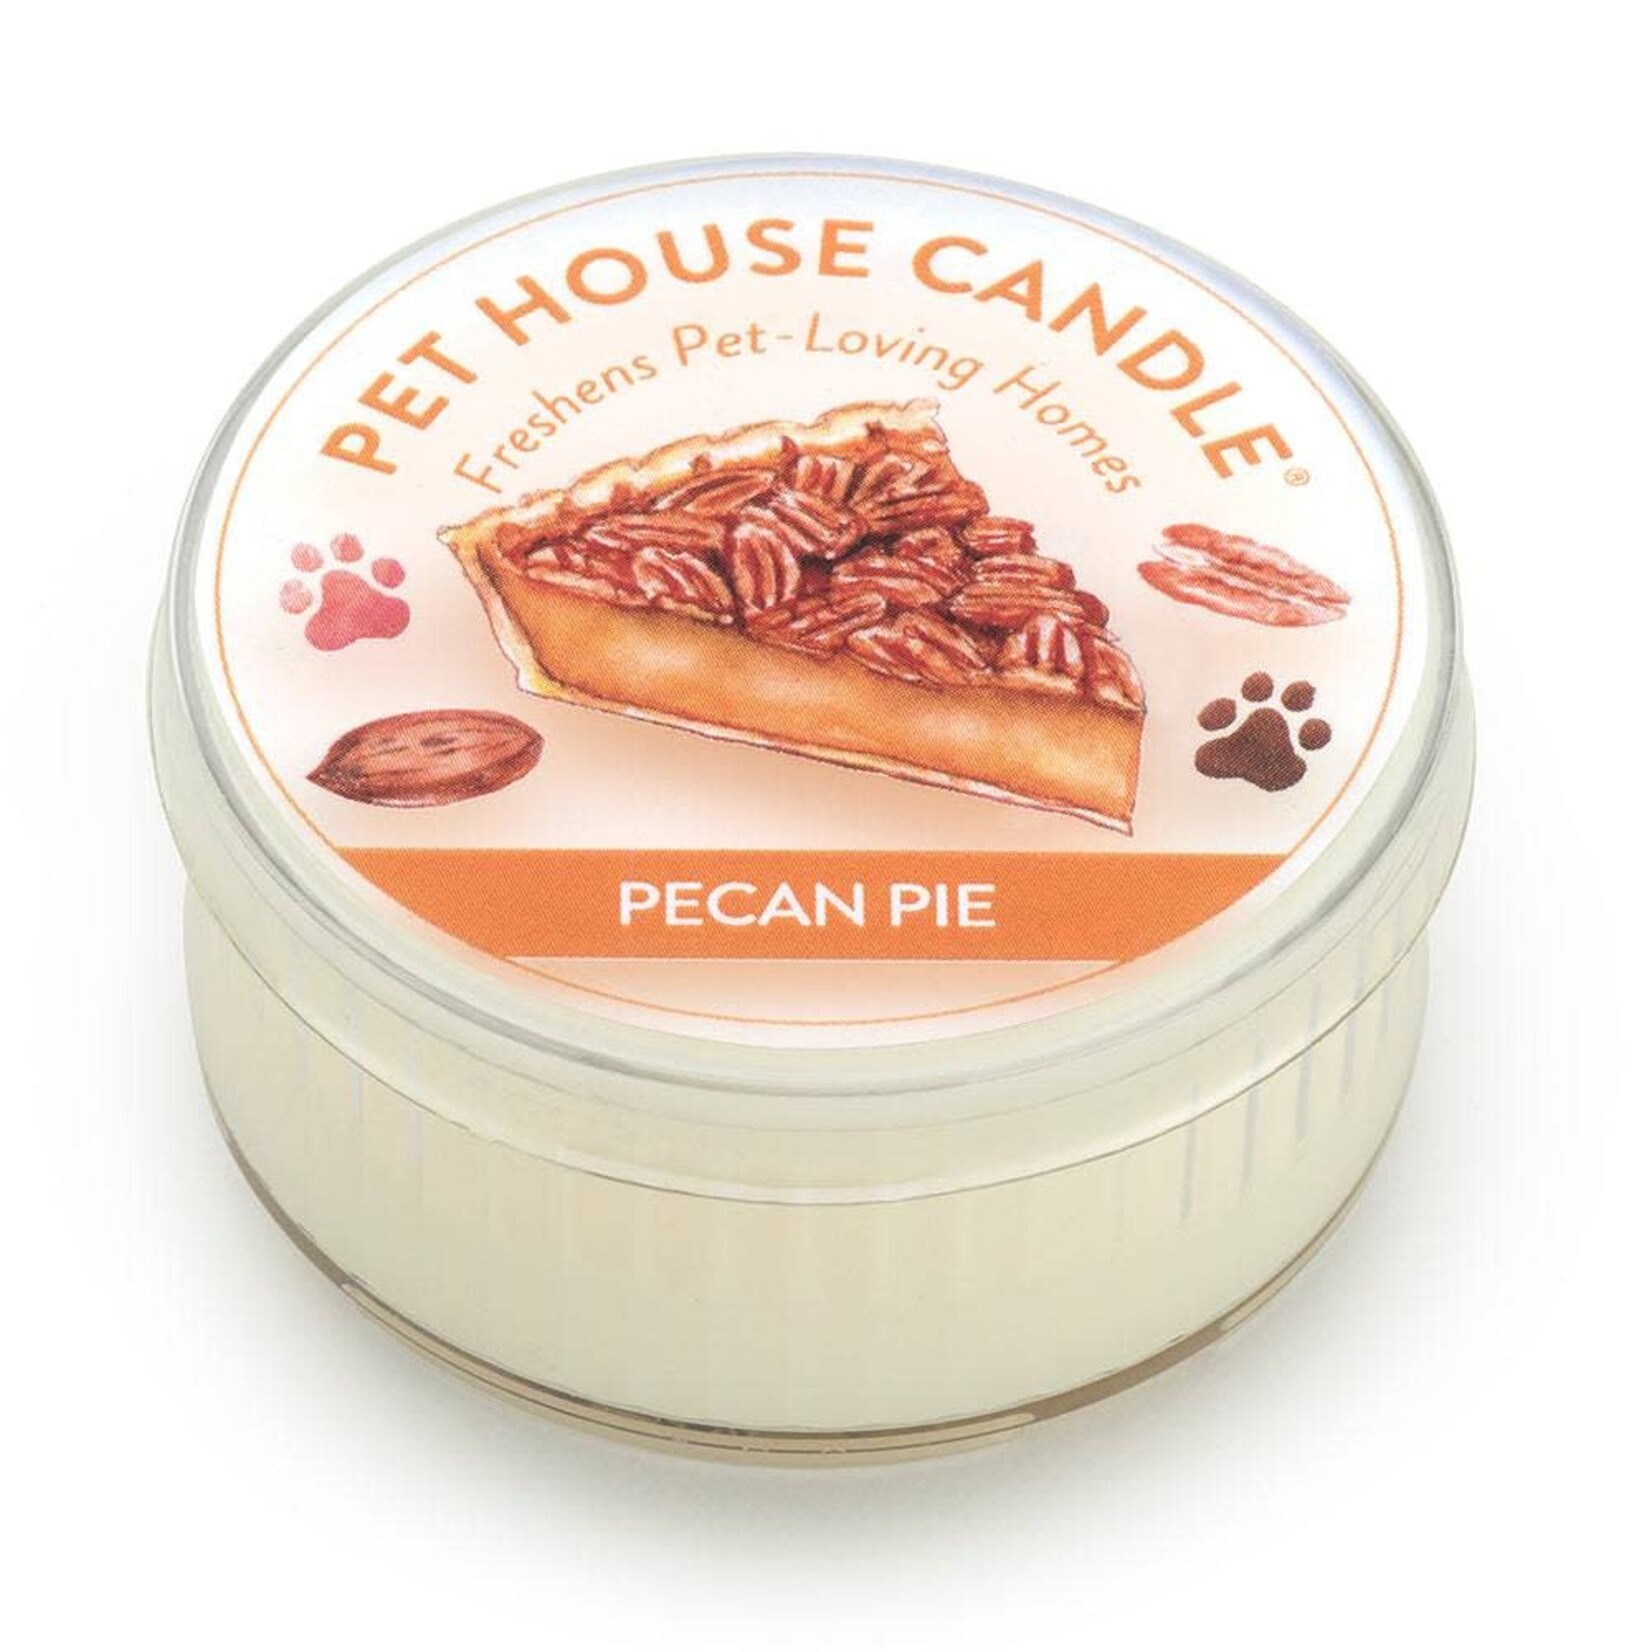 PET HOUSE CANDLE Pet House Mini Candles Pecan Pie